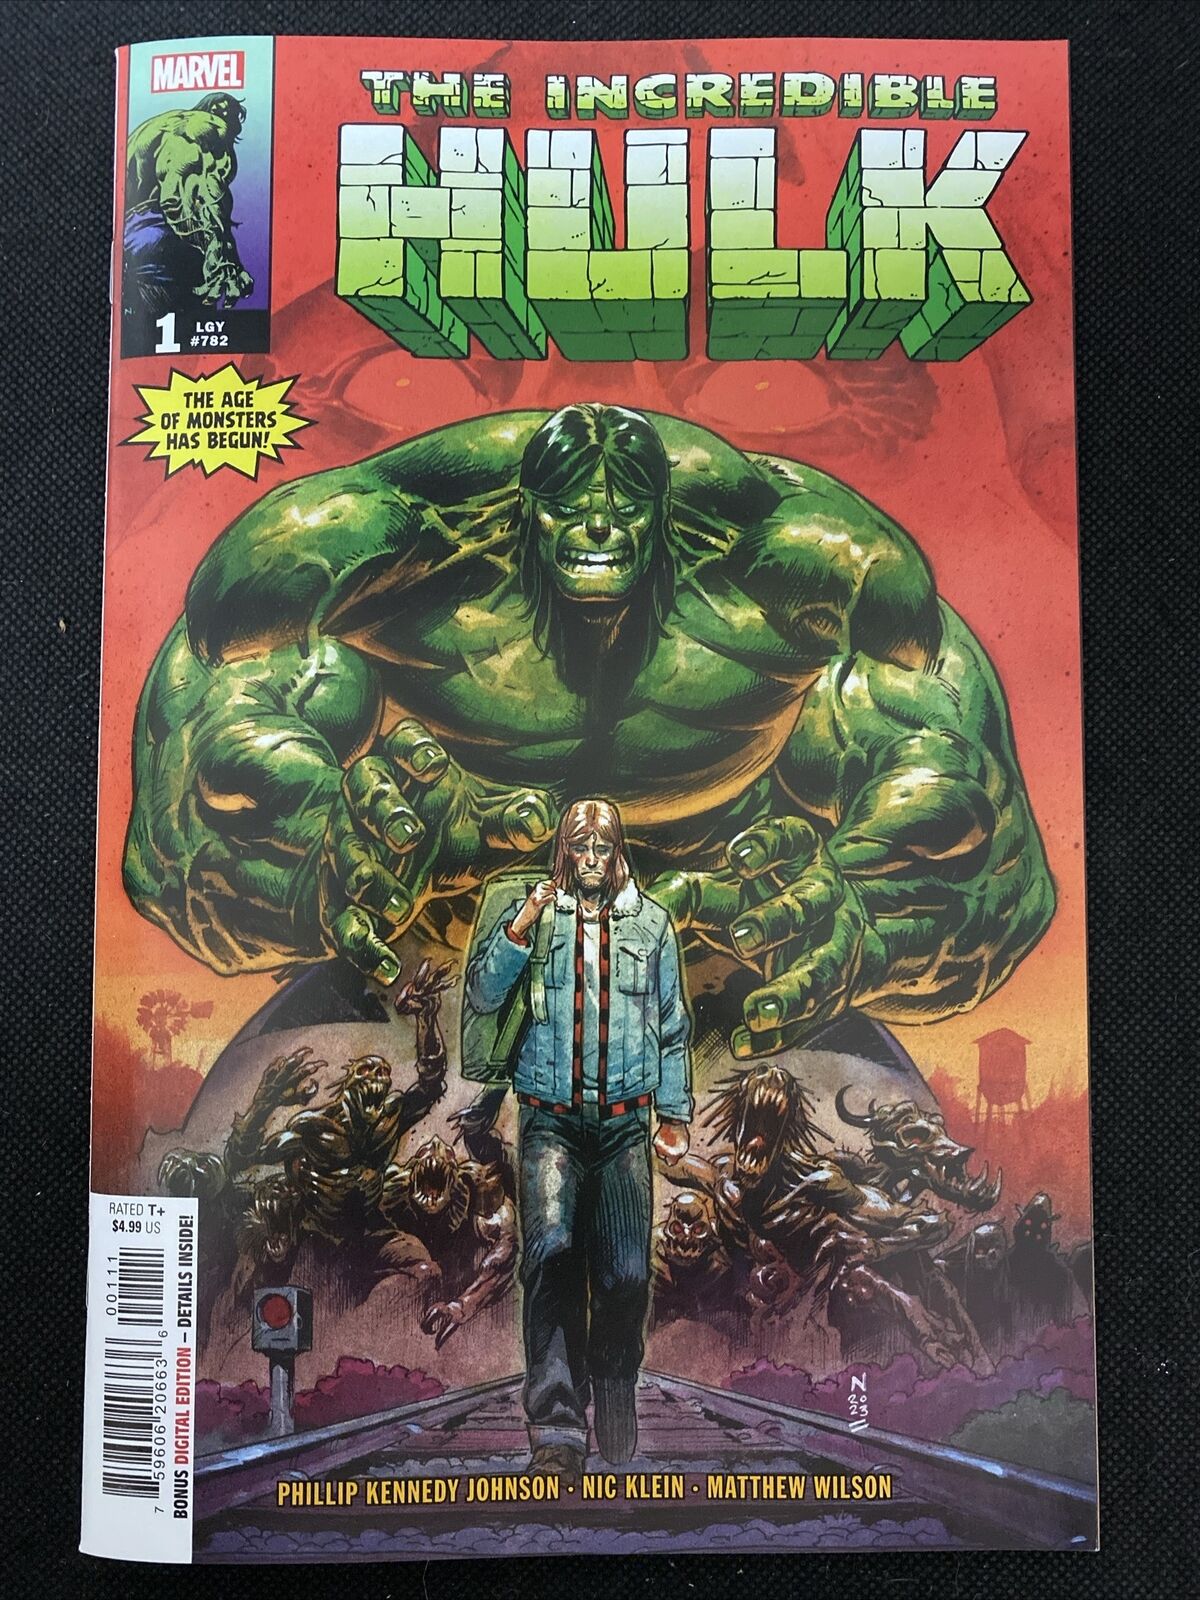 INCREDIBLE HULK #1 (Marvel 2023) 1st Print Cover A * 1st app Charlie * NM